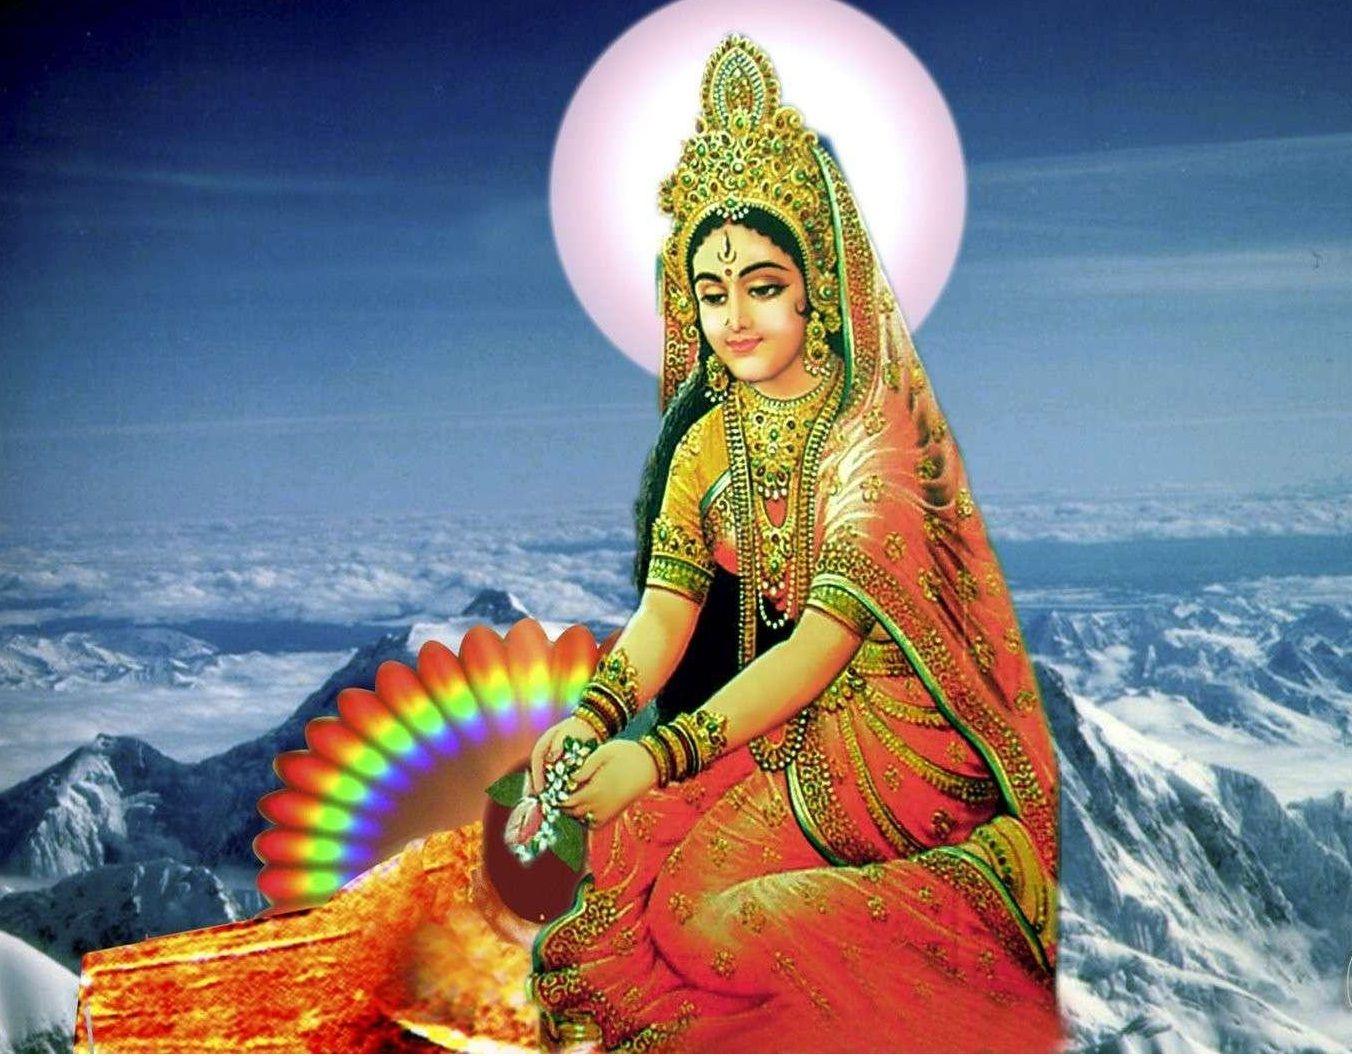 Hindu God Wallpaper for Mobile Phones, God Image & HD Photo